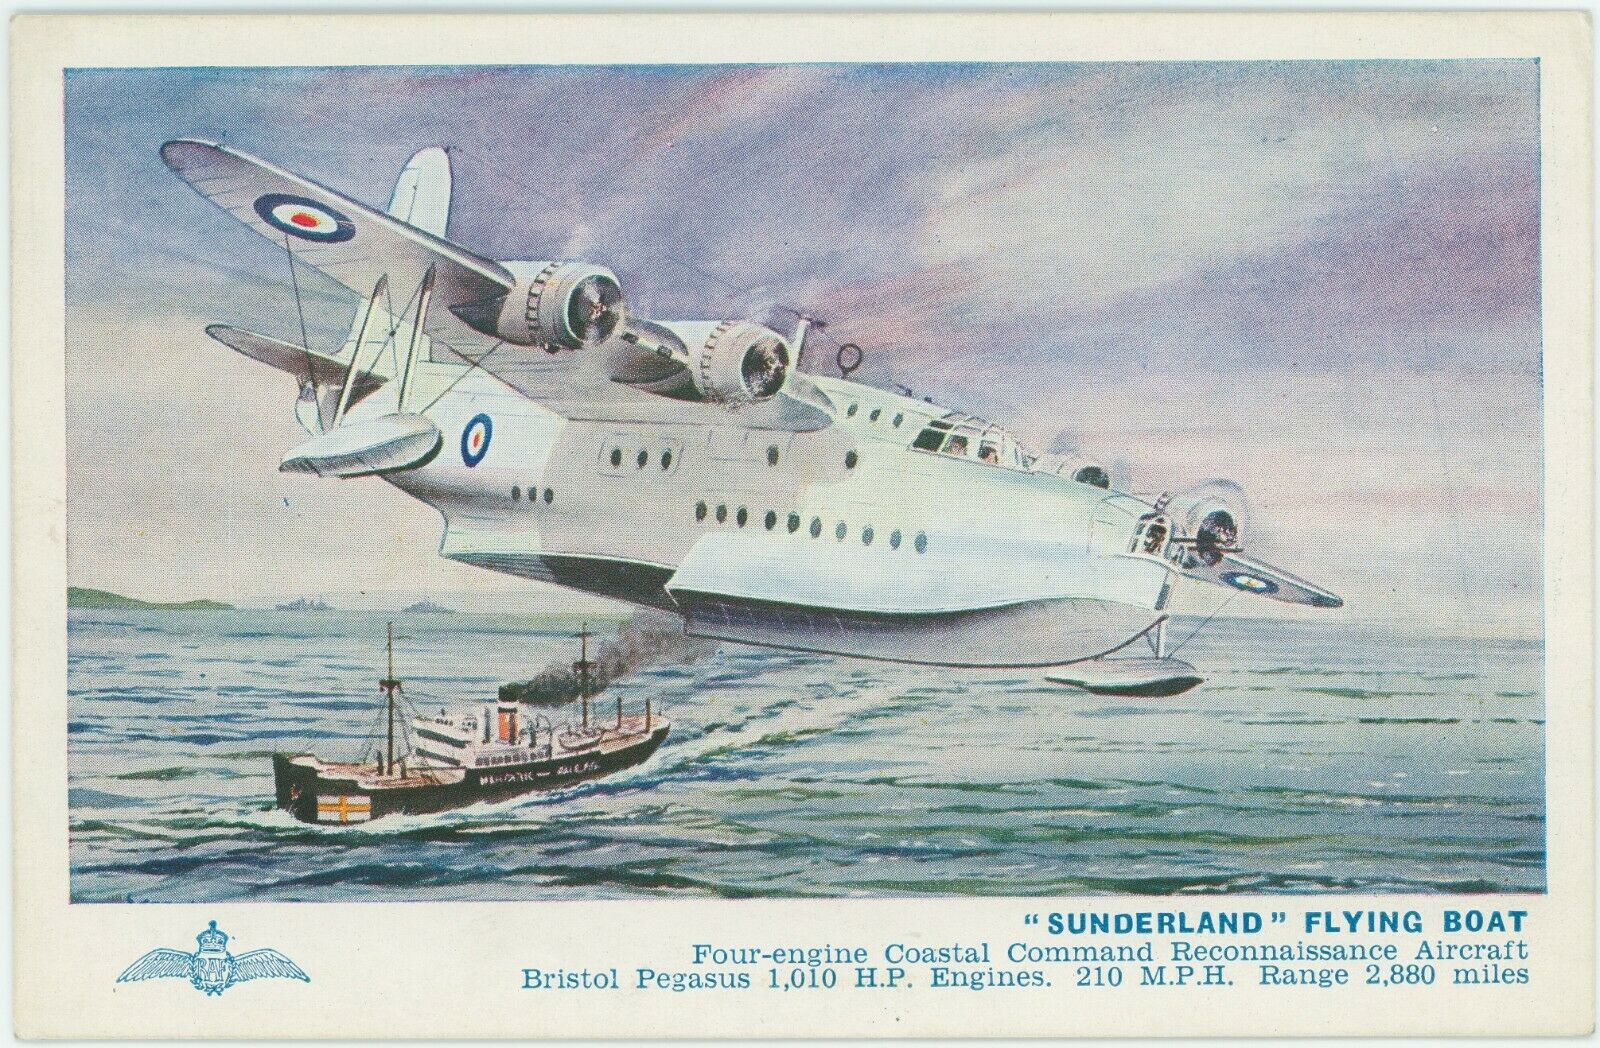 House Clearance - ORIGINAL WW2 J SALMON SERIES AIRCRAFT POSTCARD - SUNDERLAND FLYING BOAT